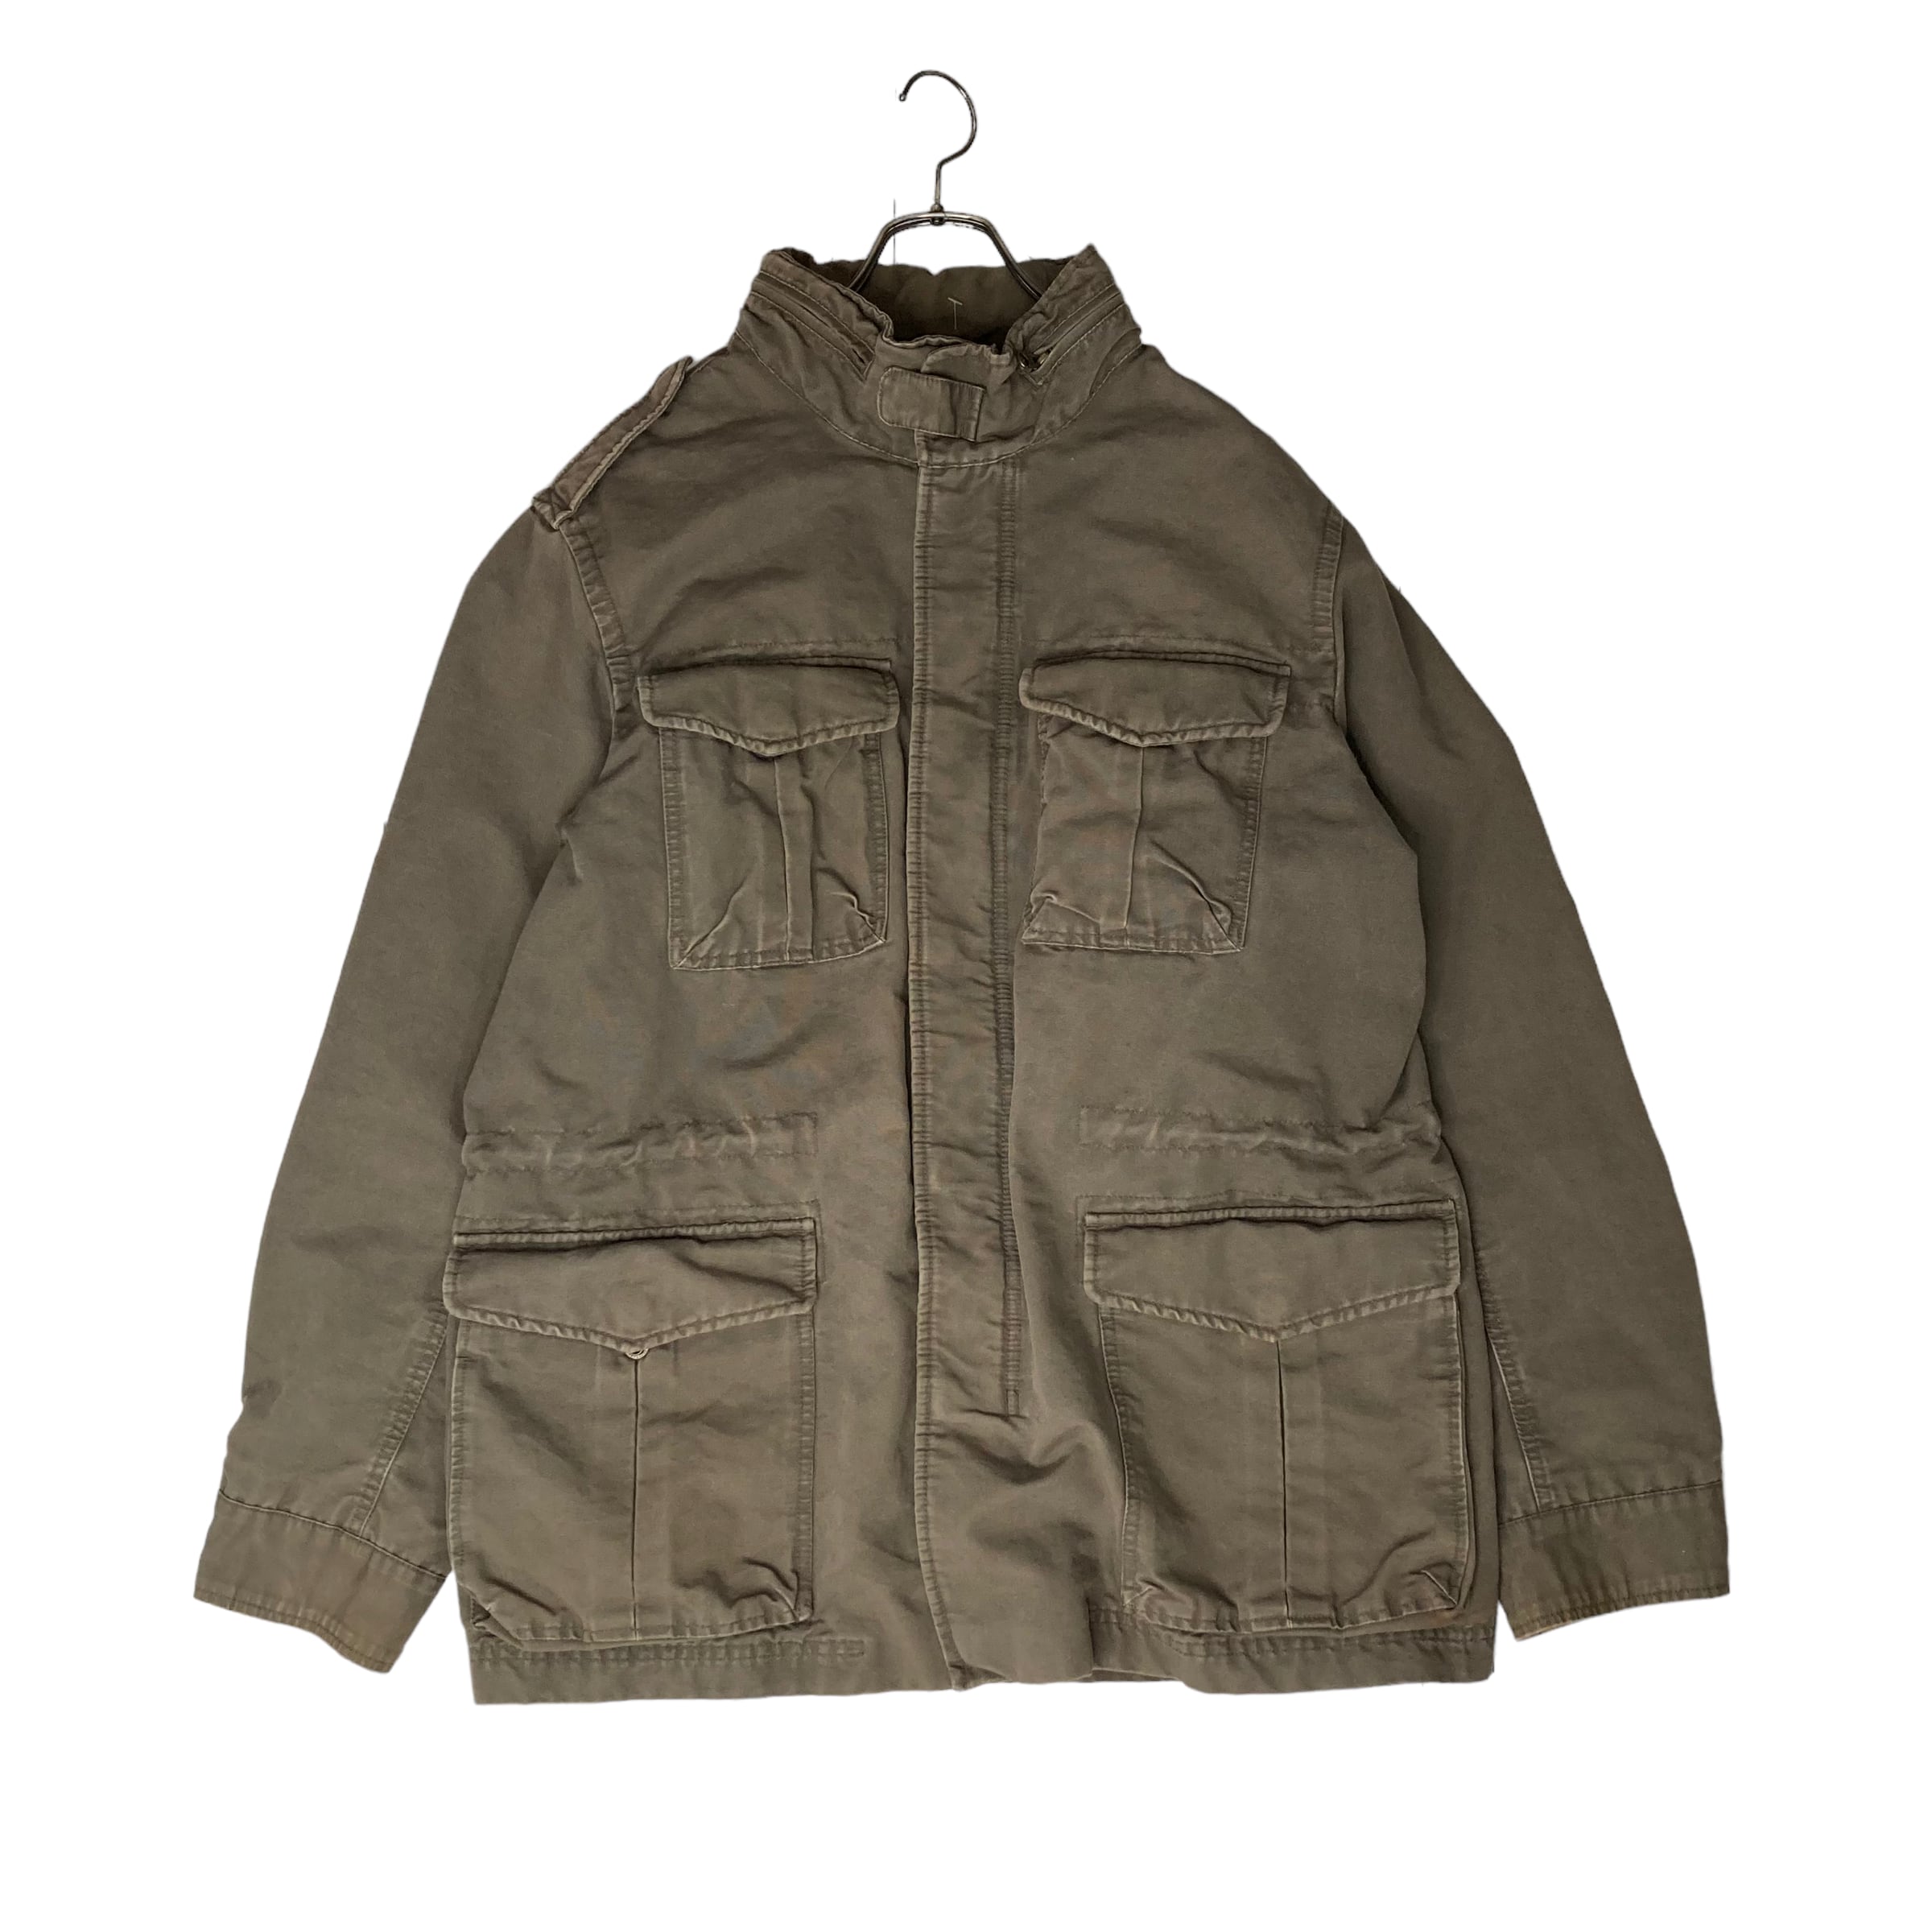 OLDGAP military coat - アウター